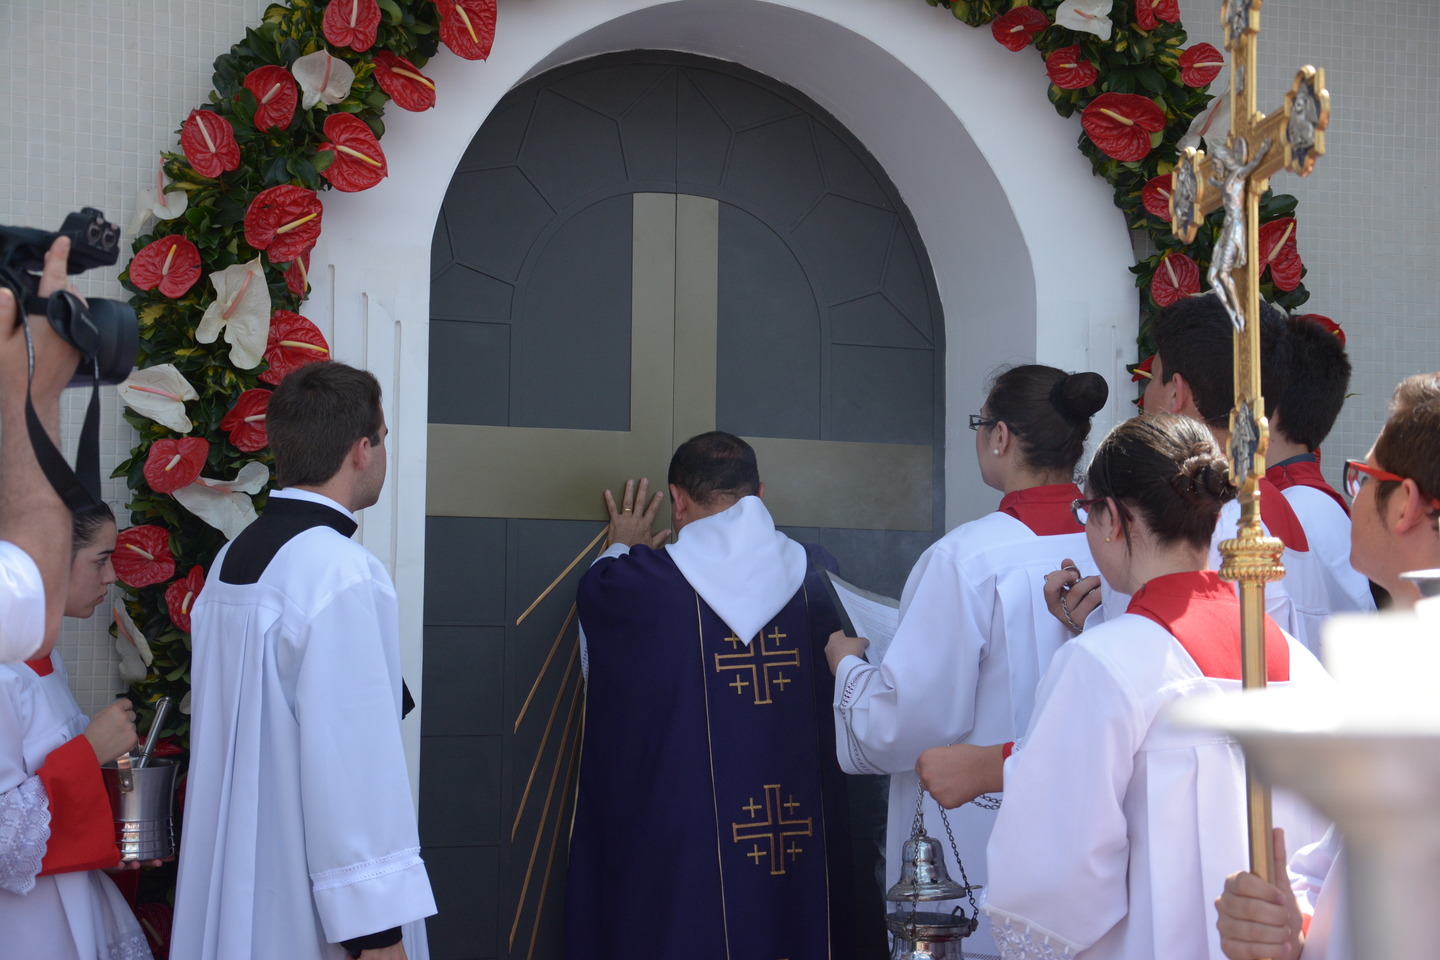 Inaugurada a Porta Santa – a Porta da Misericórdia